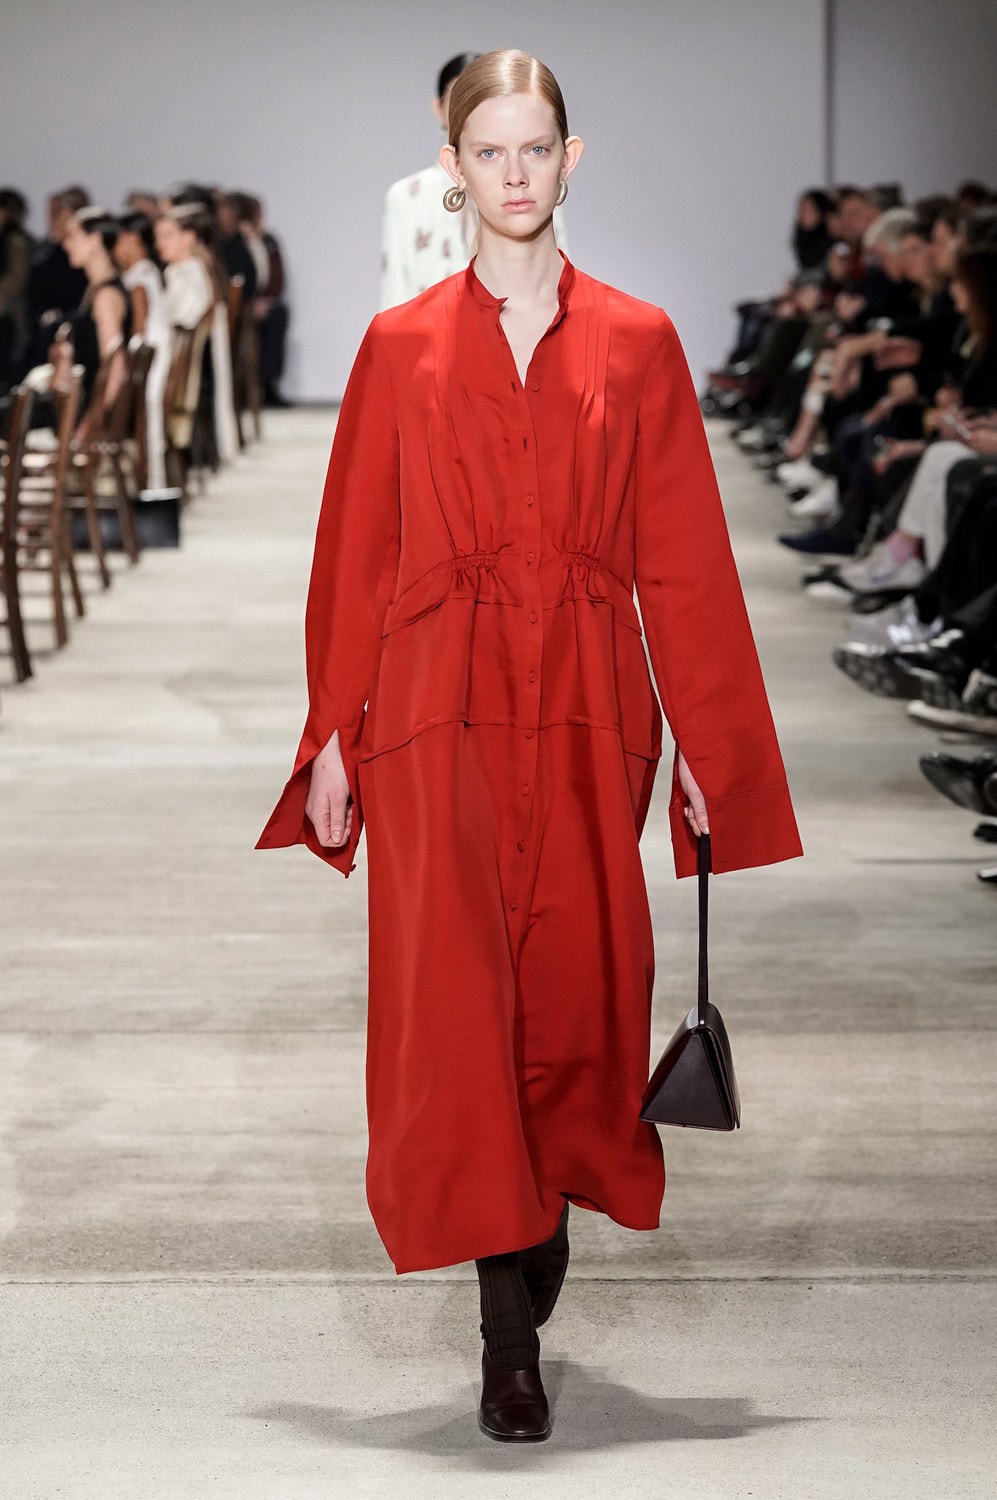 Jil Sander Fall/Winter 2020 Collection Runway Show Dress Red